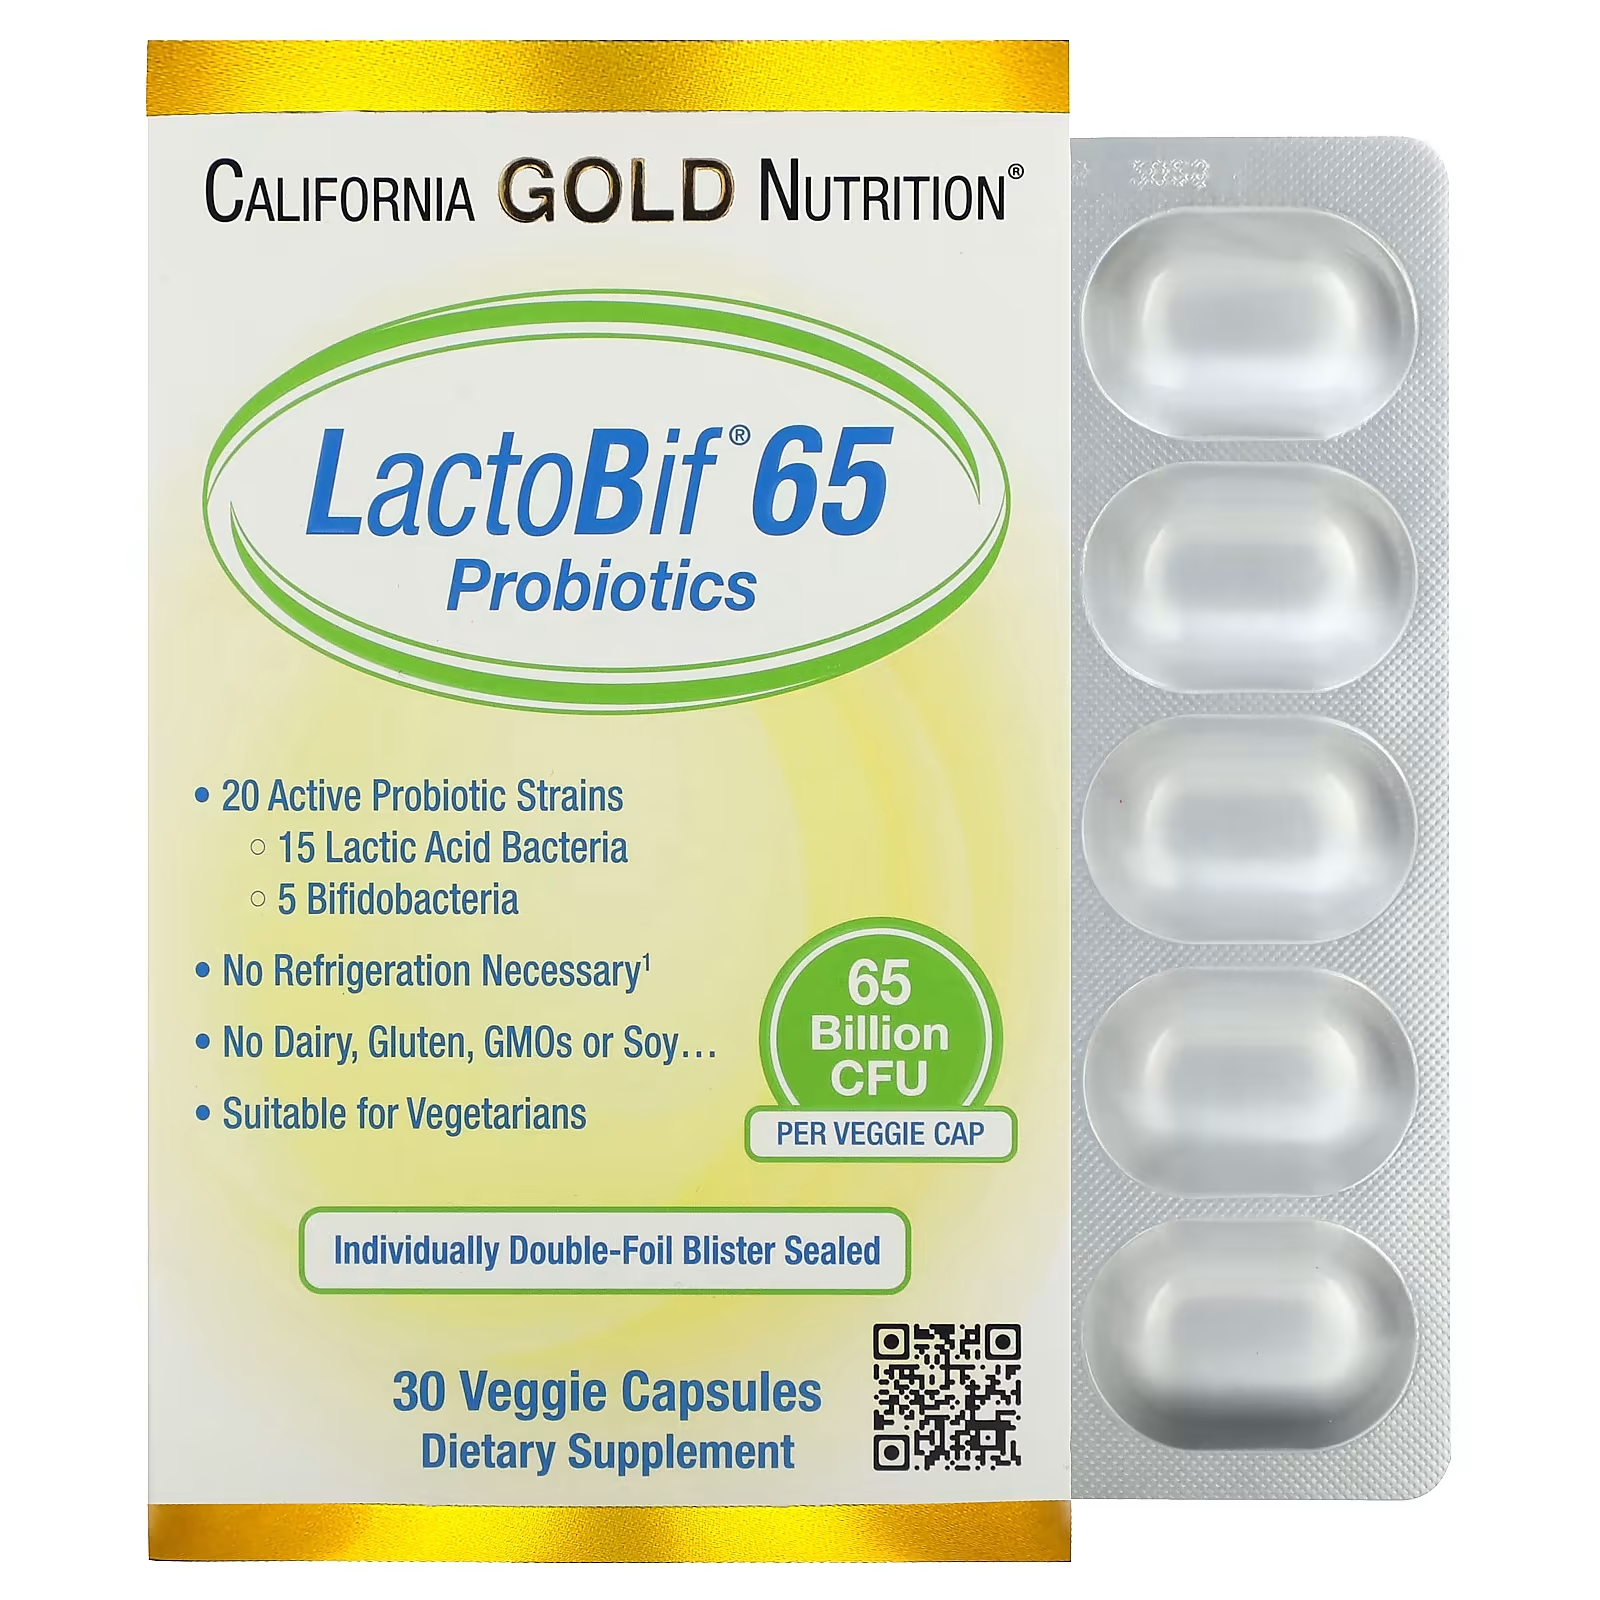 California Gold Nutrition LactoBif 65 Пробиотики 65 миллиардов КОЕ 30 растительных капсул california gold nutrition lactobif пробиотики 5 млрд кое 10 растительных капсул